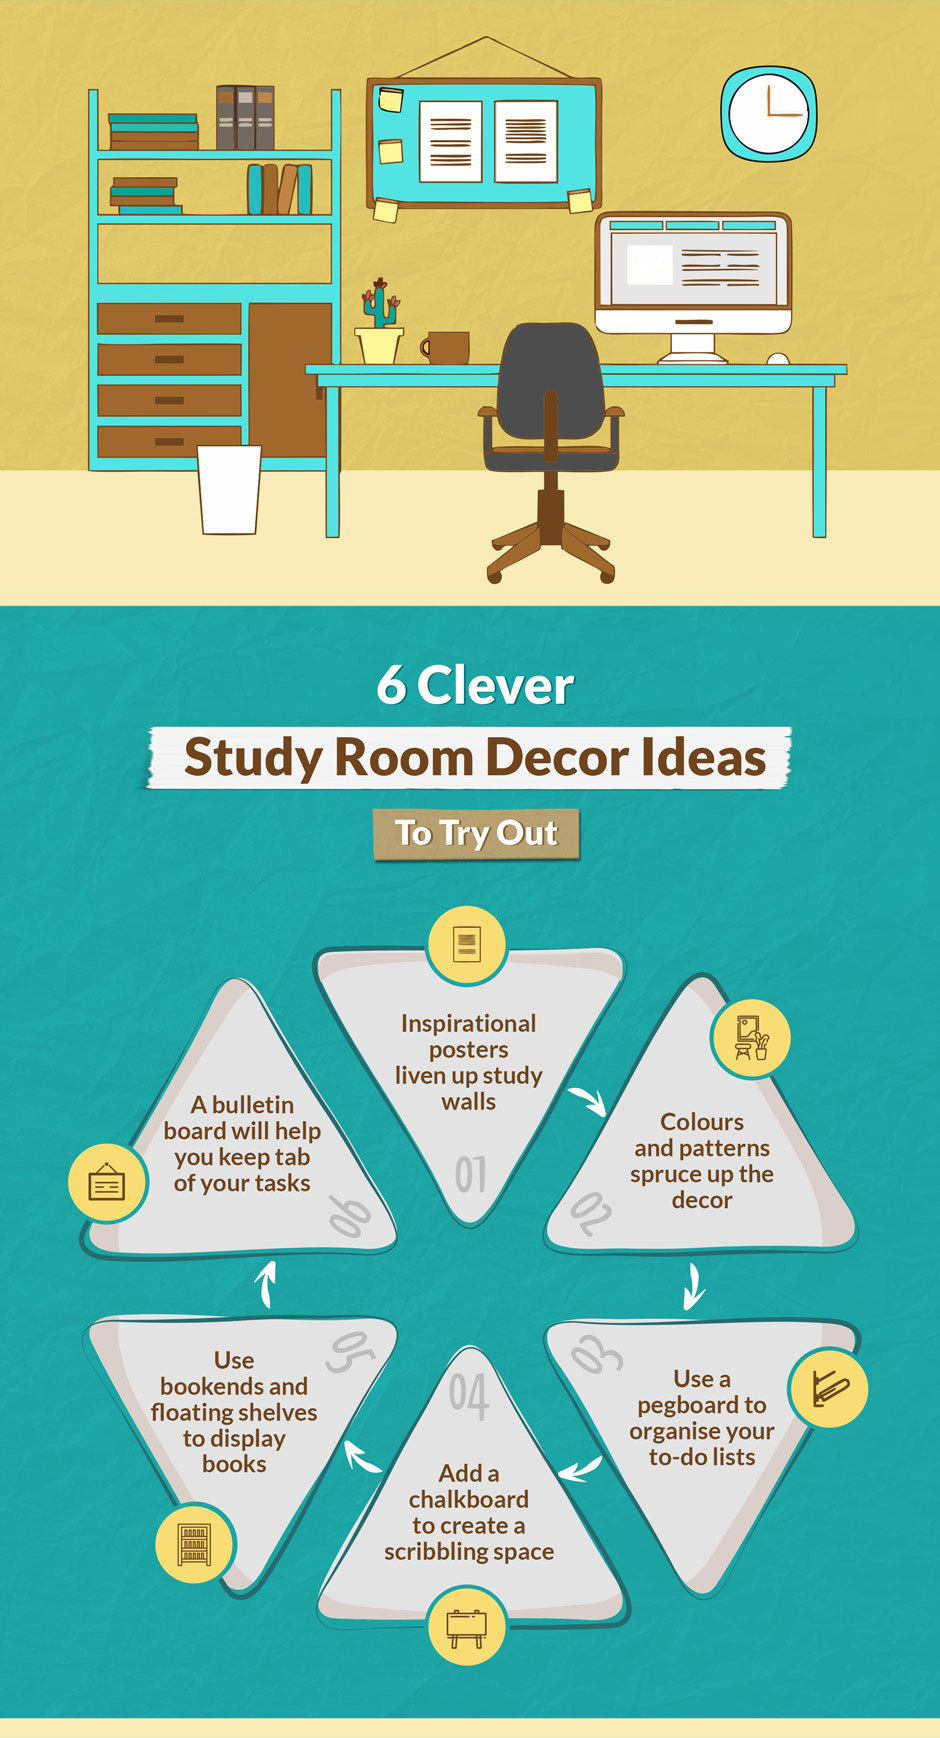 Six clever study room decor ideas